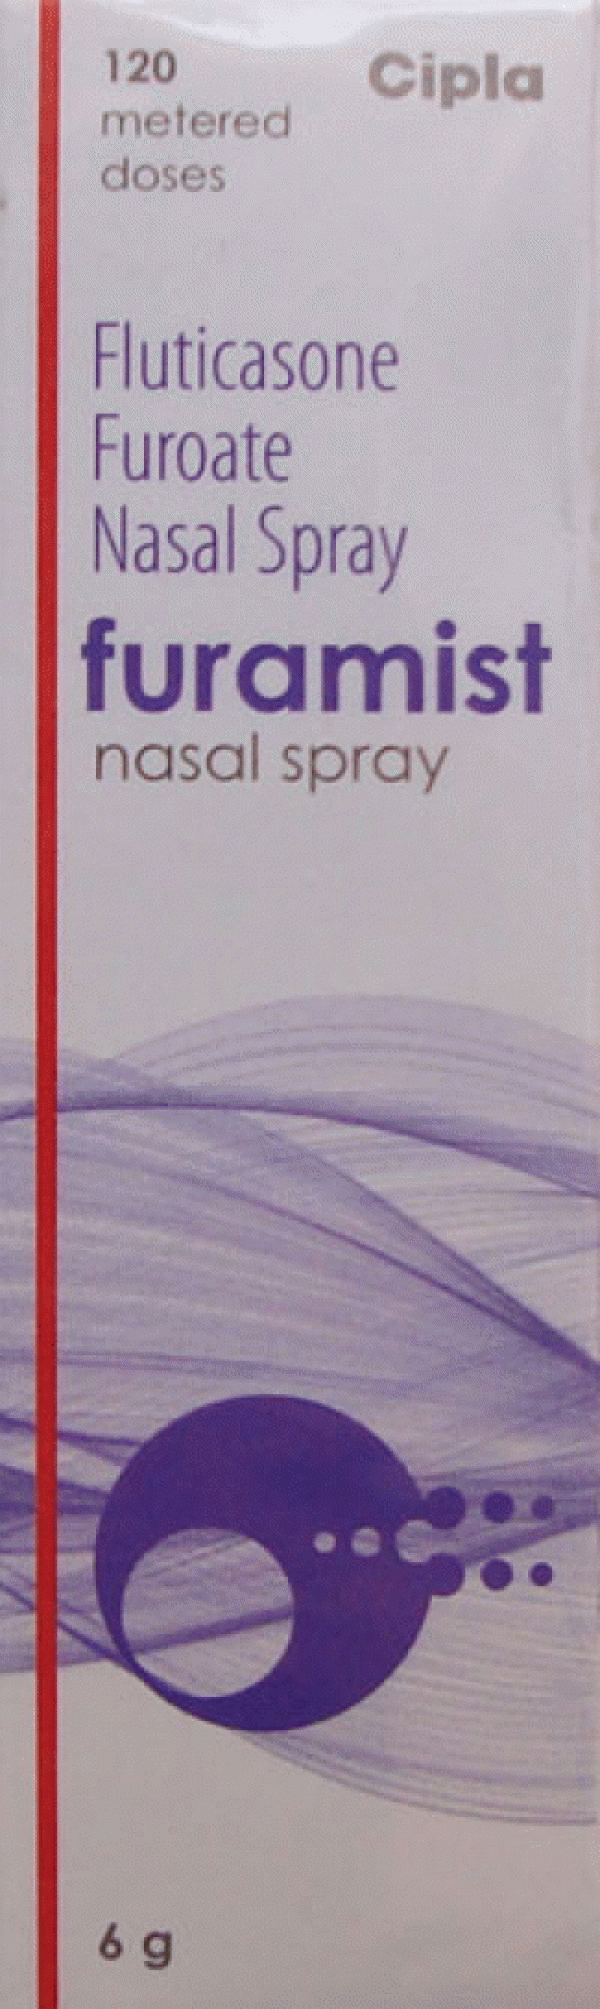 A box of Fluticasone Furoate 27.5mcg Nasal Spray